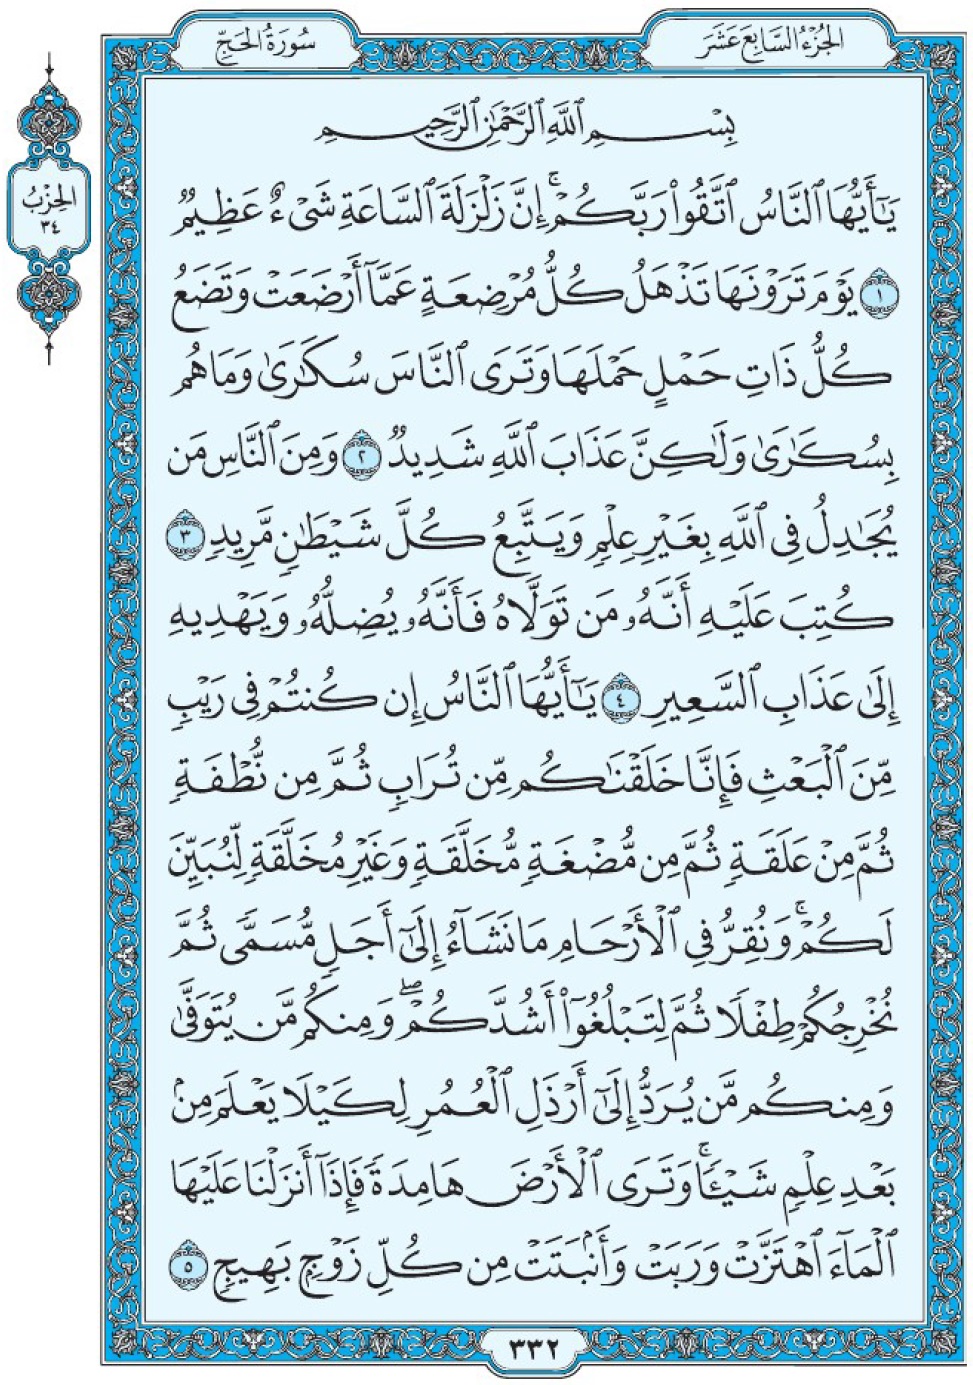 Коран Мединский мусхаф страница 332, сура 22 Аль-Хадж سورة ٢٢ الحج 